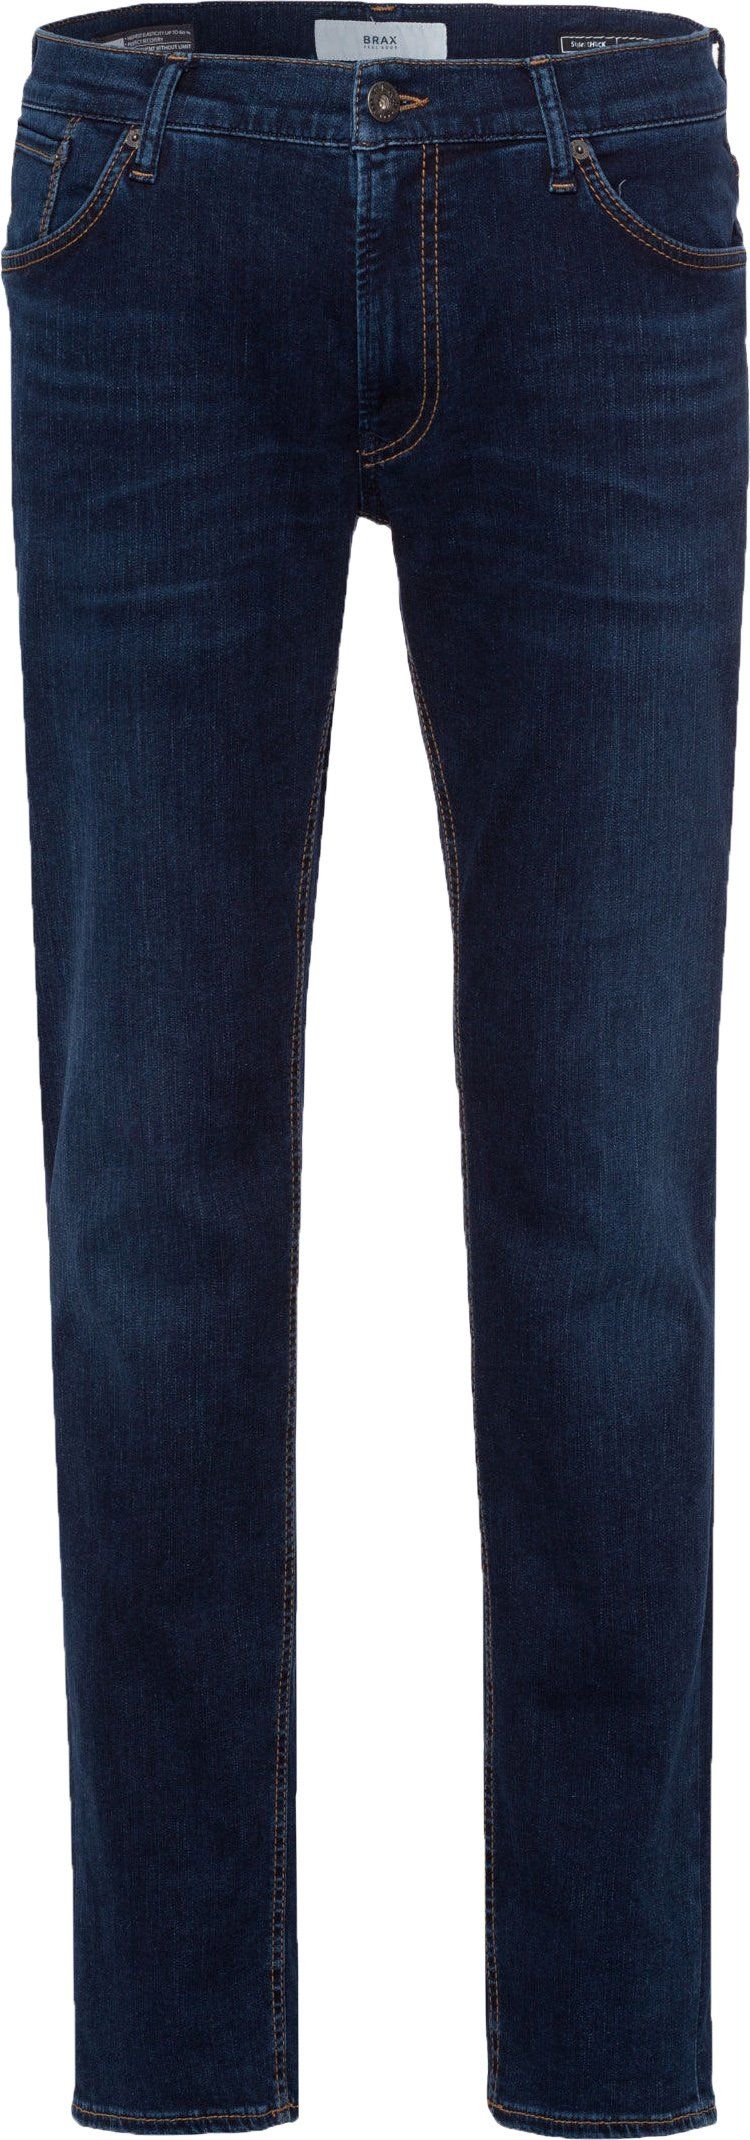 Brax Chuck Denim Jeans Blue size W 30 product